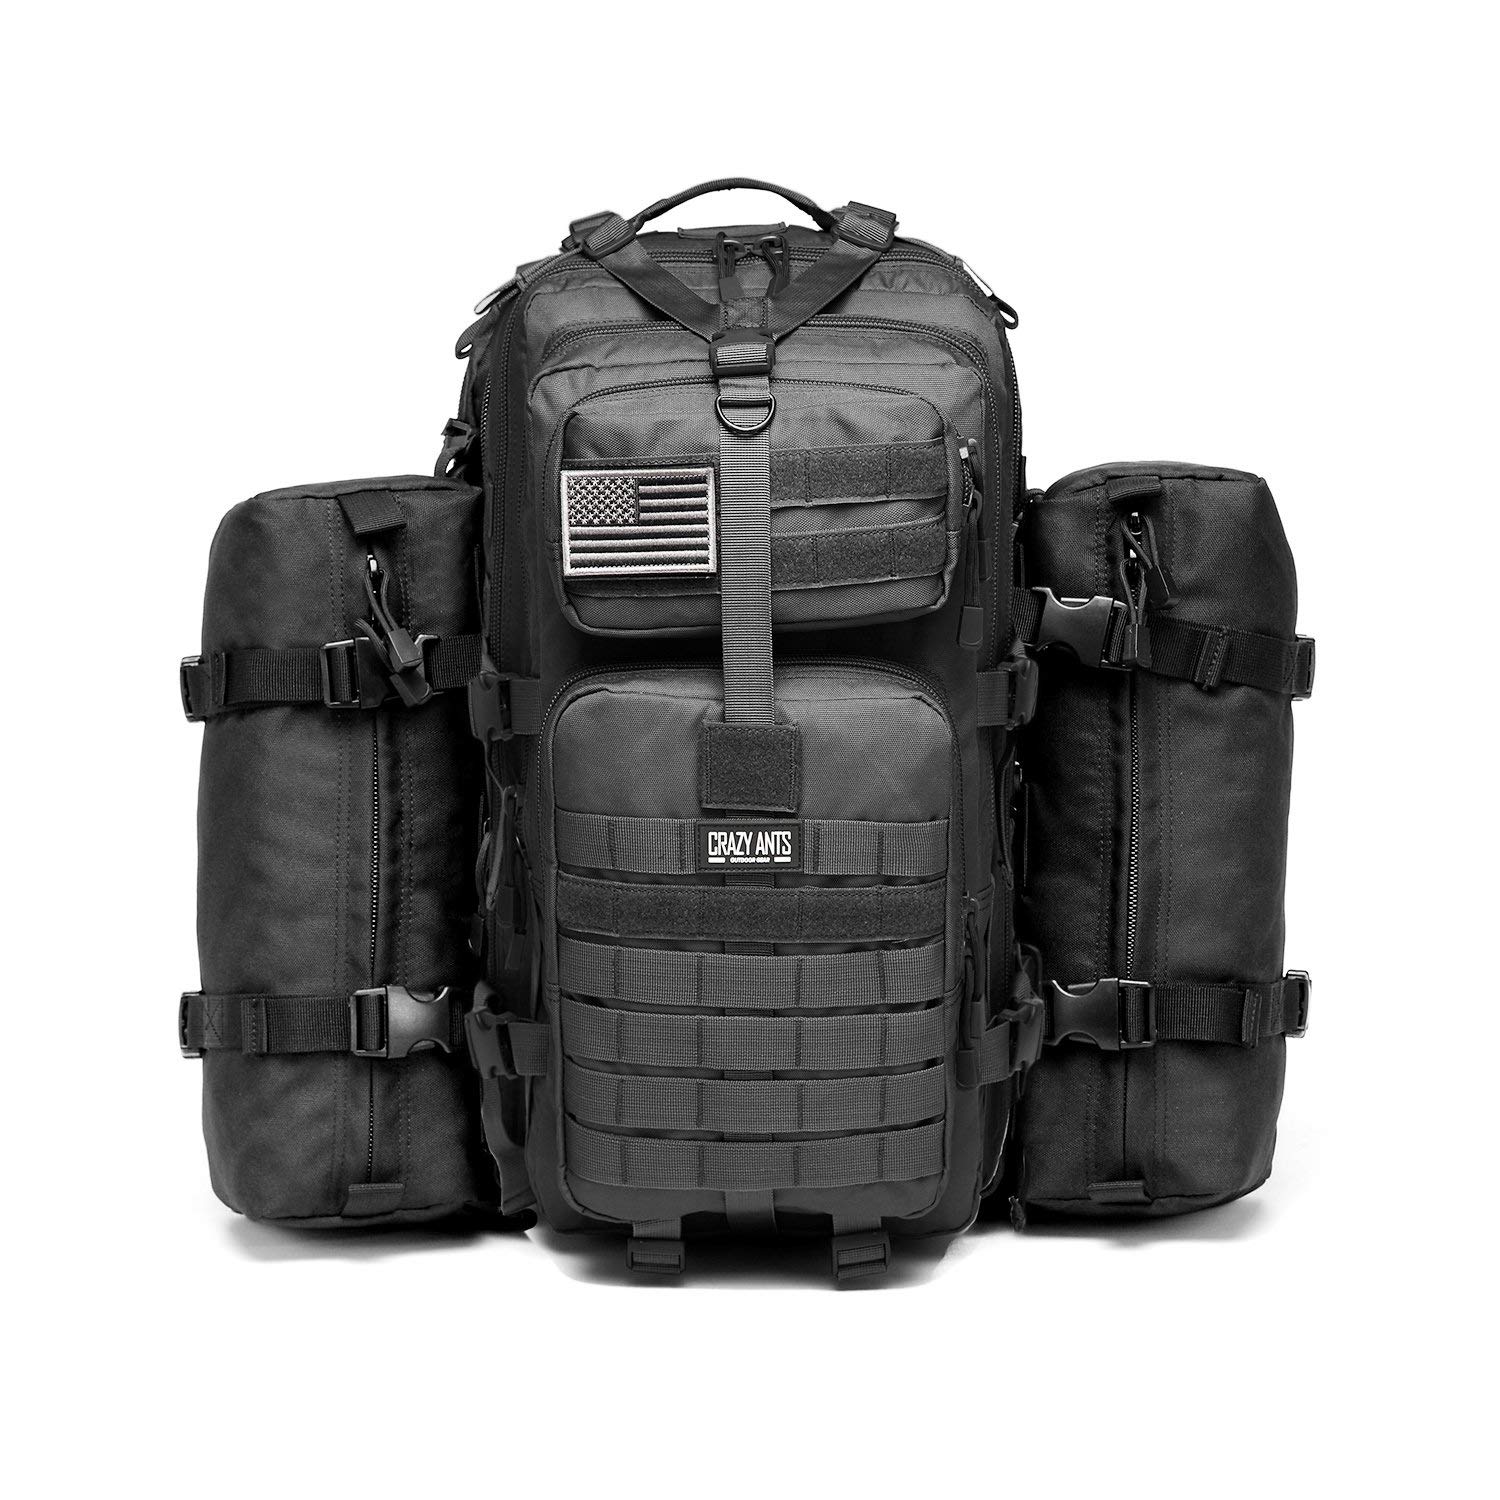 Waterproof Military Tactical Backpack + 2 Detachable packs